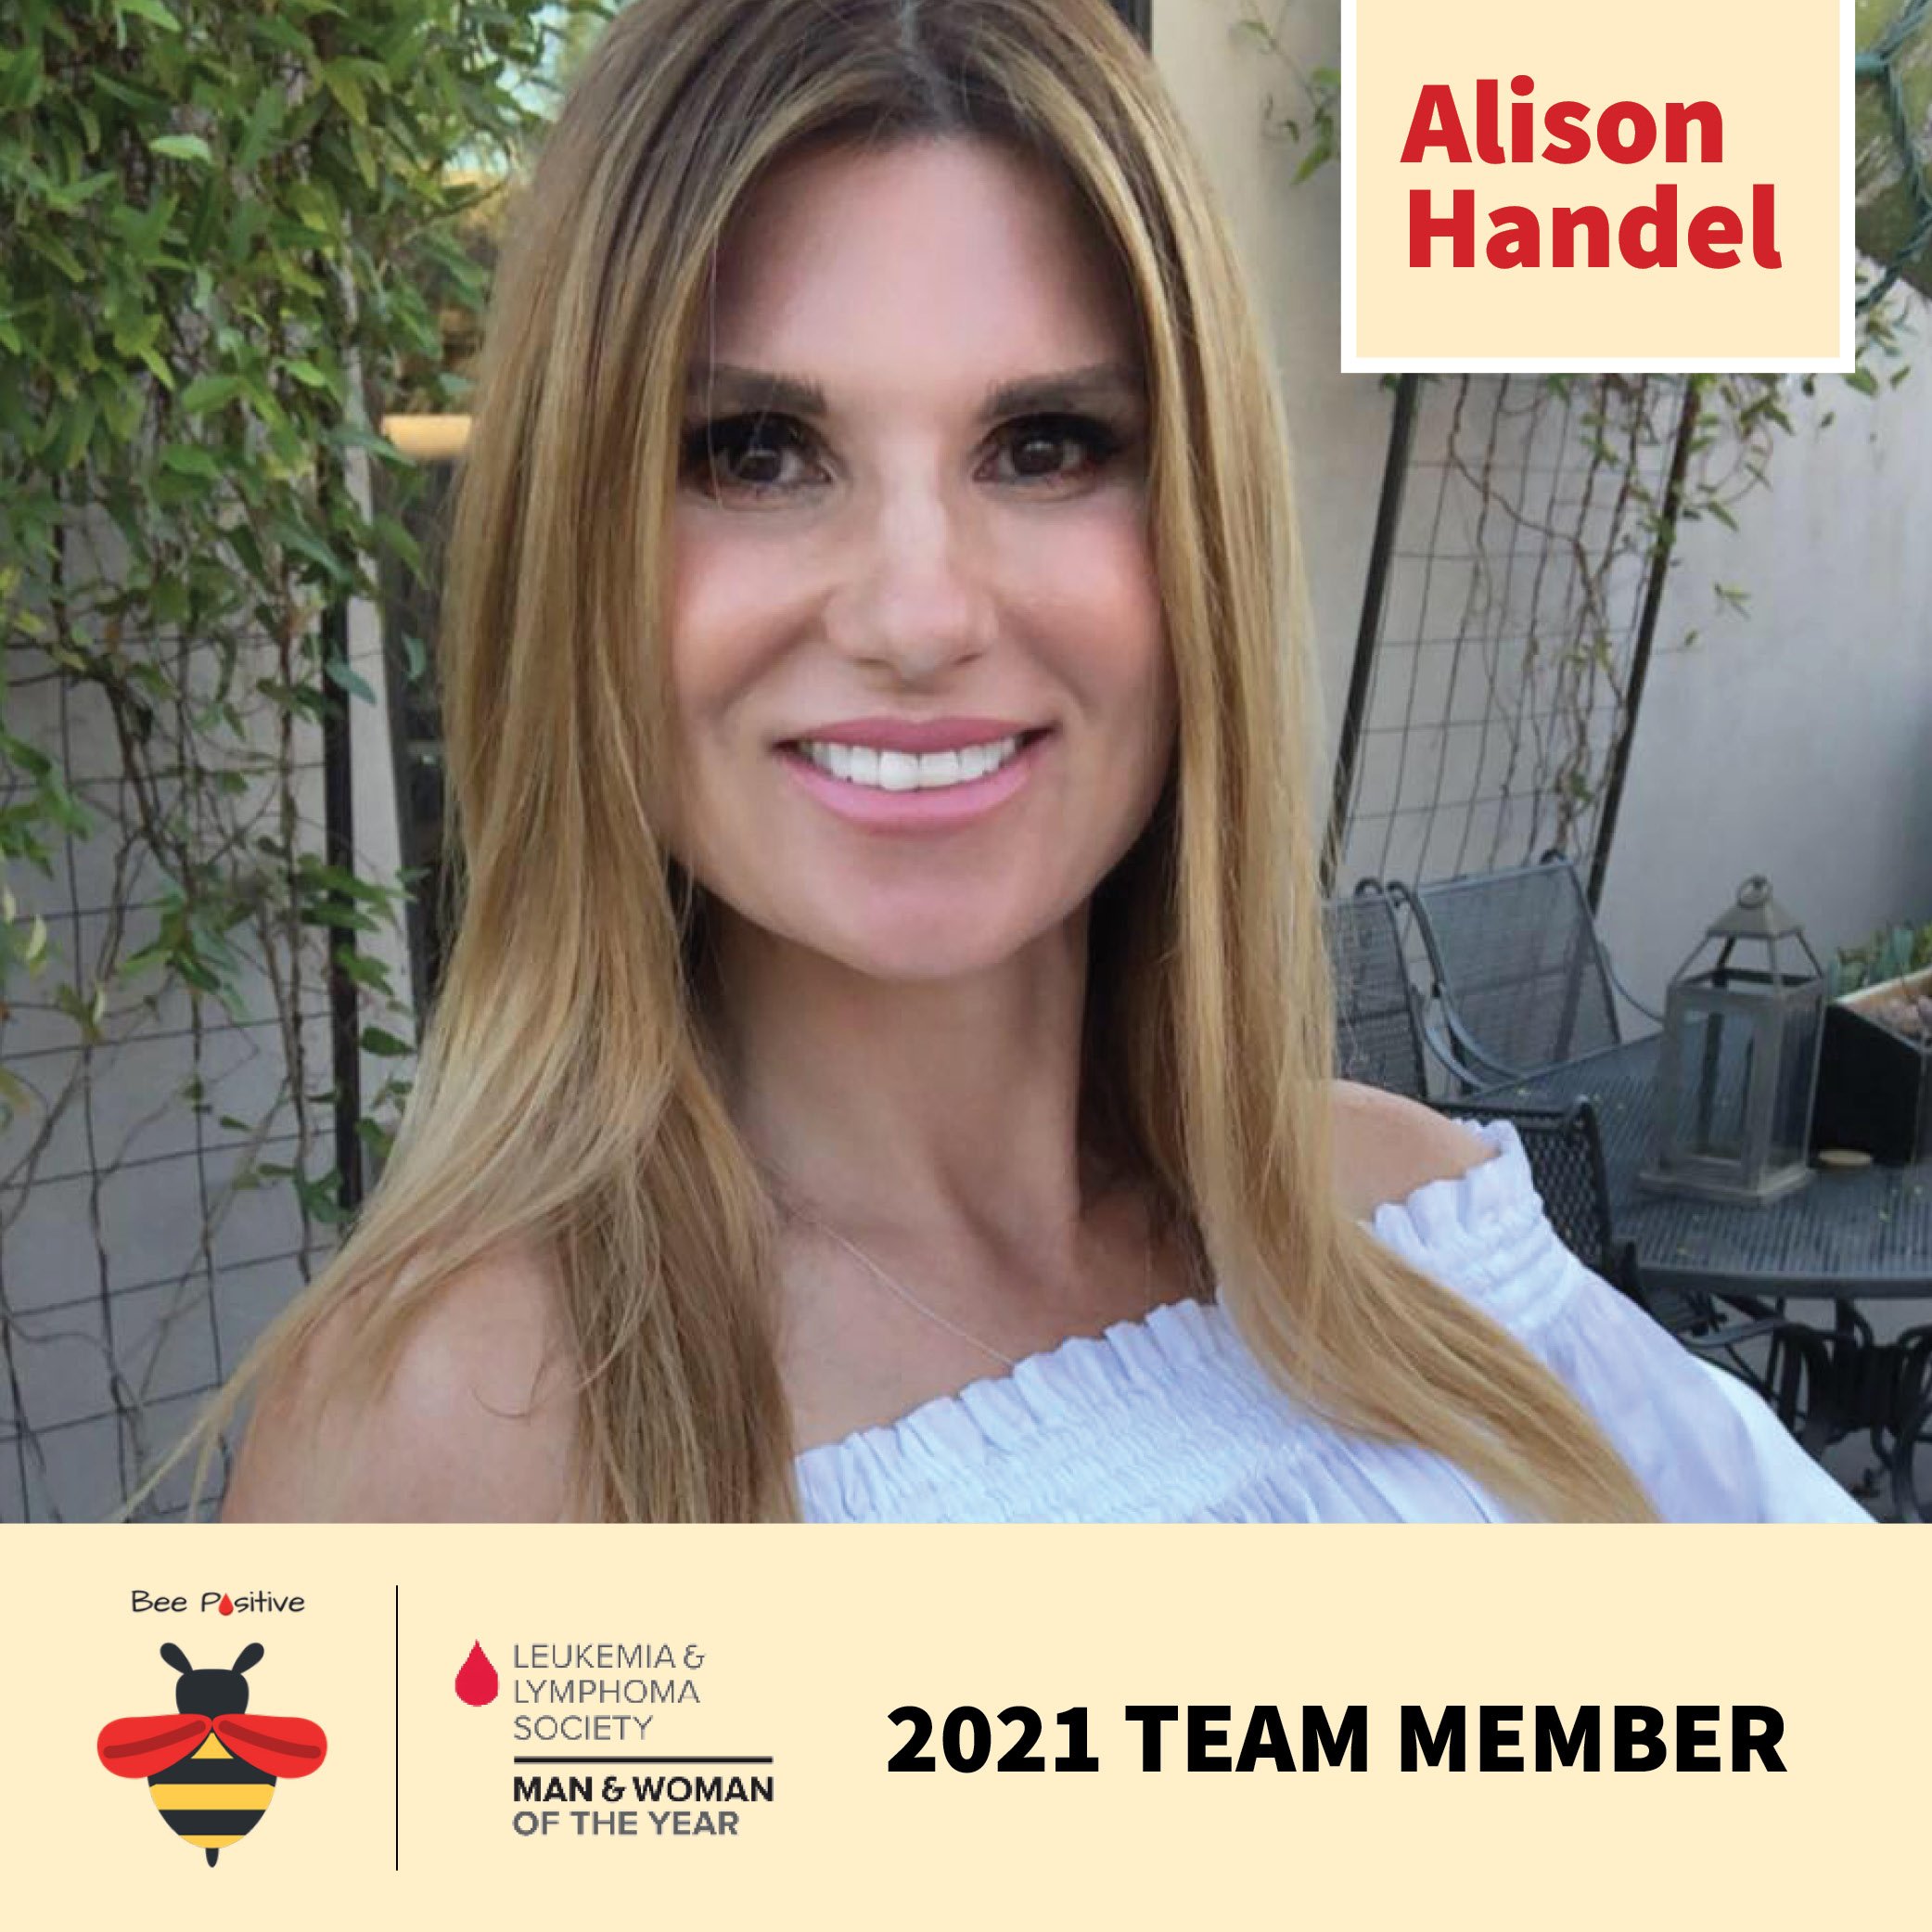 Team member announcement - AlisonHandel.jpg